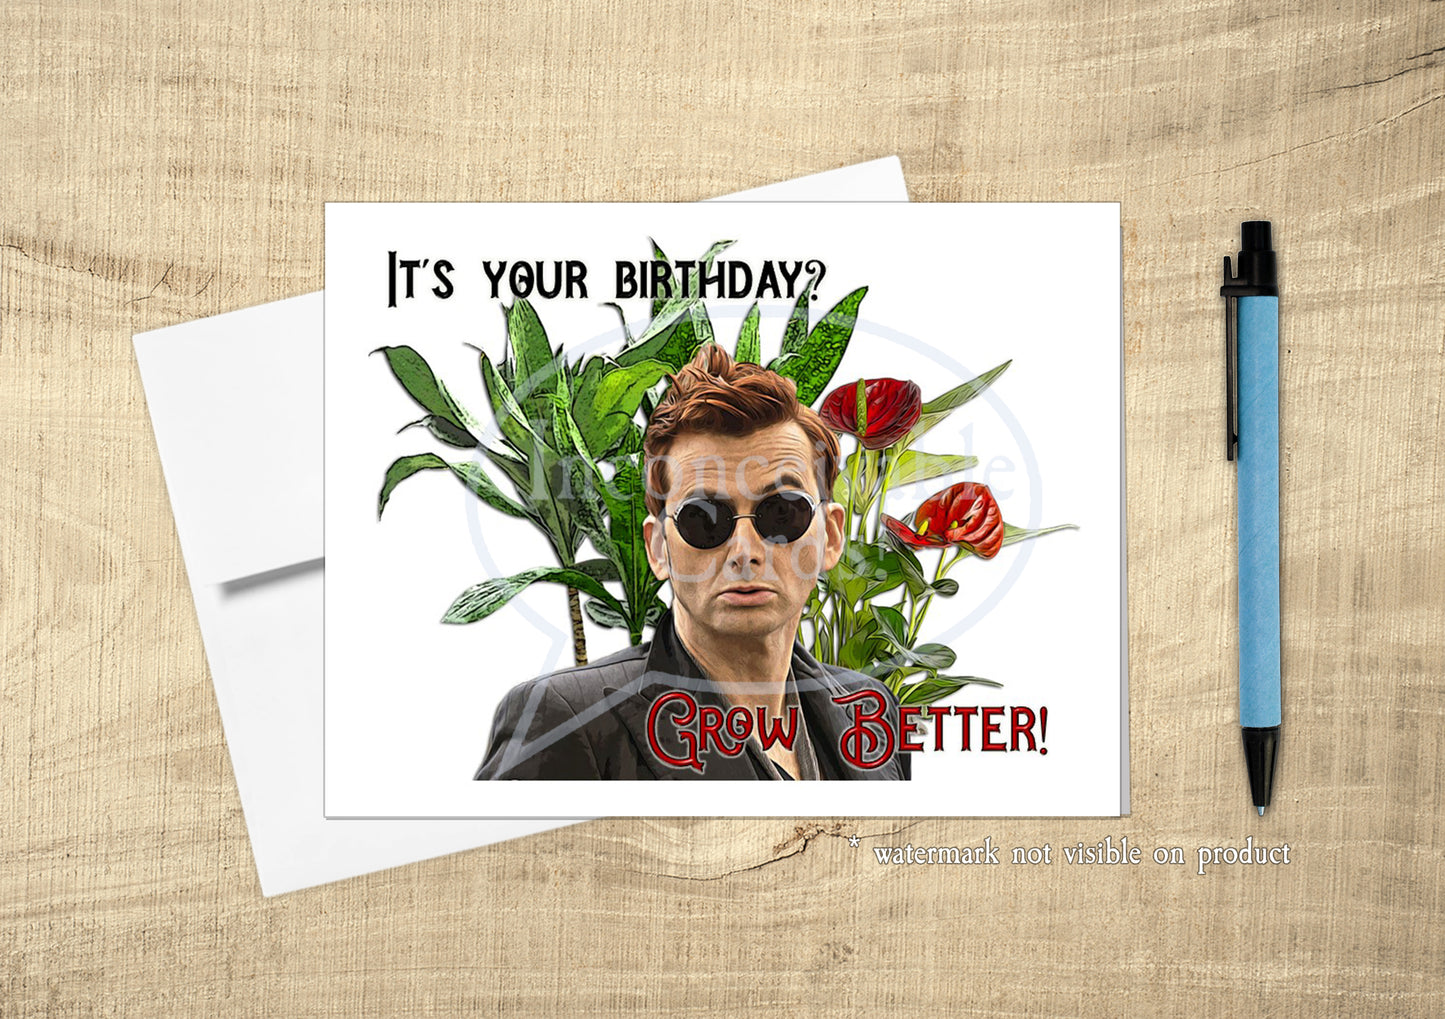 Good Omens - "Grow Better!" Funny Birthday Card